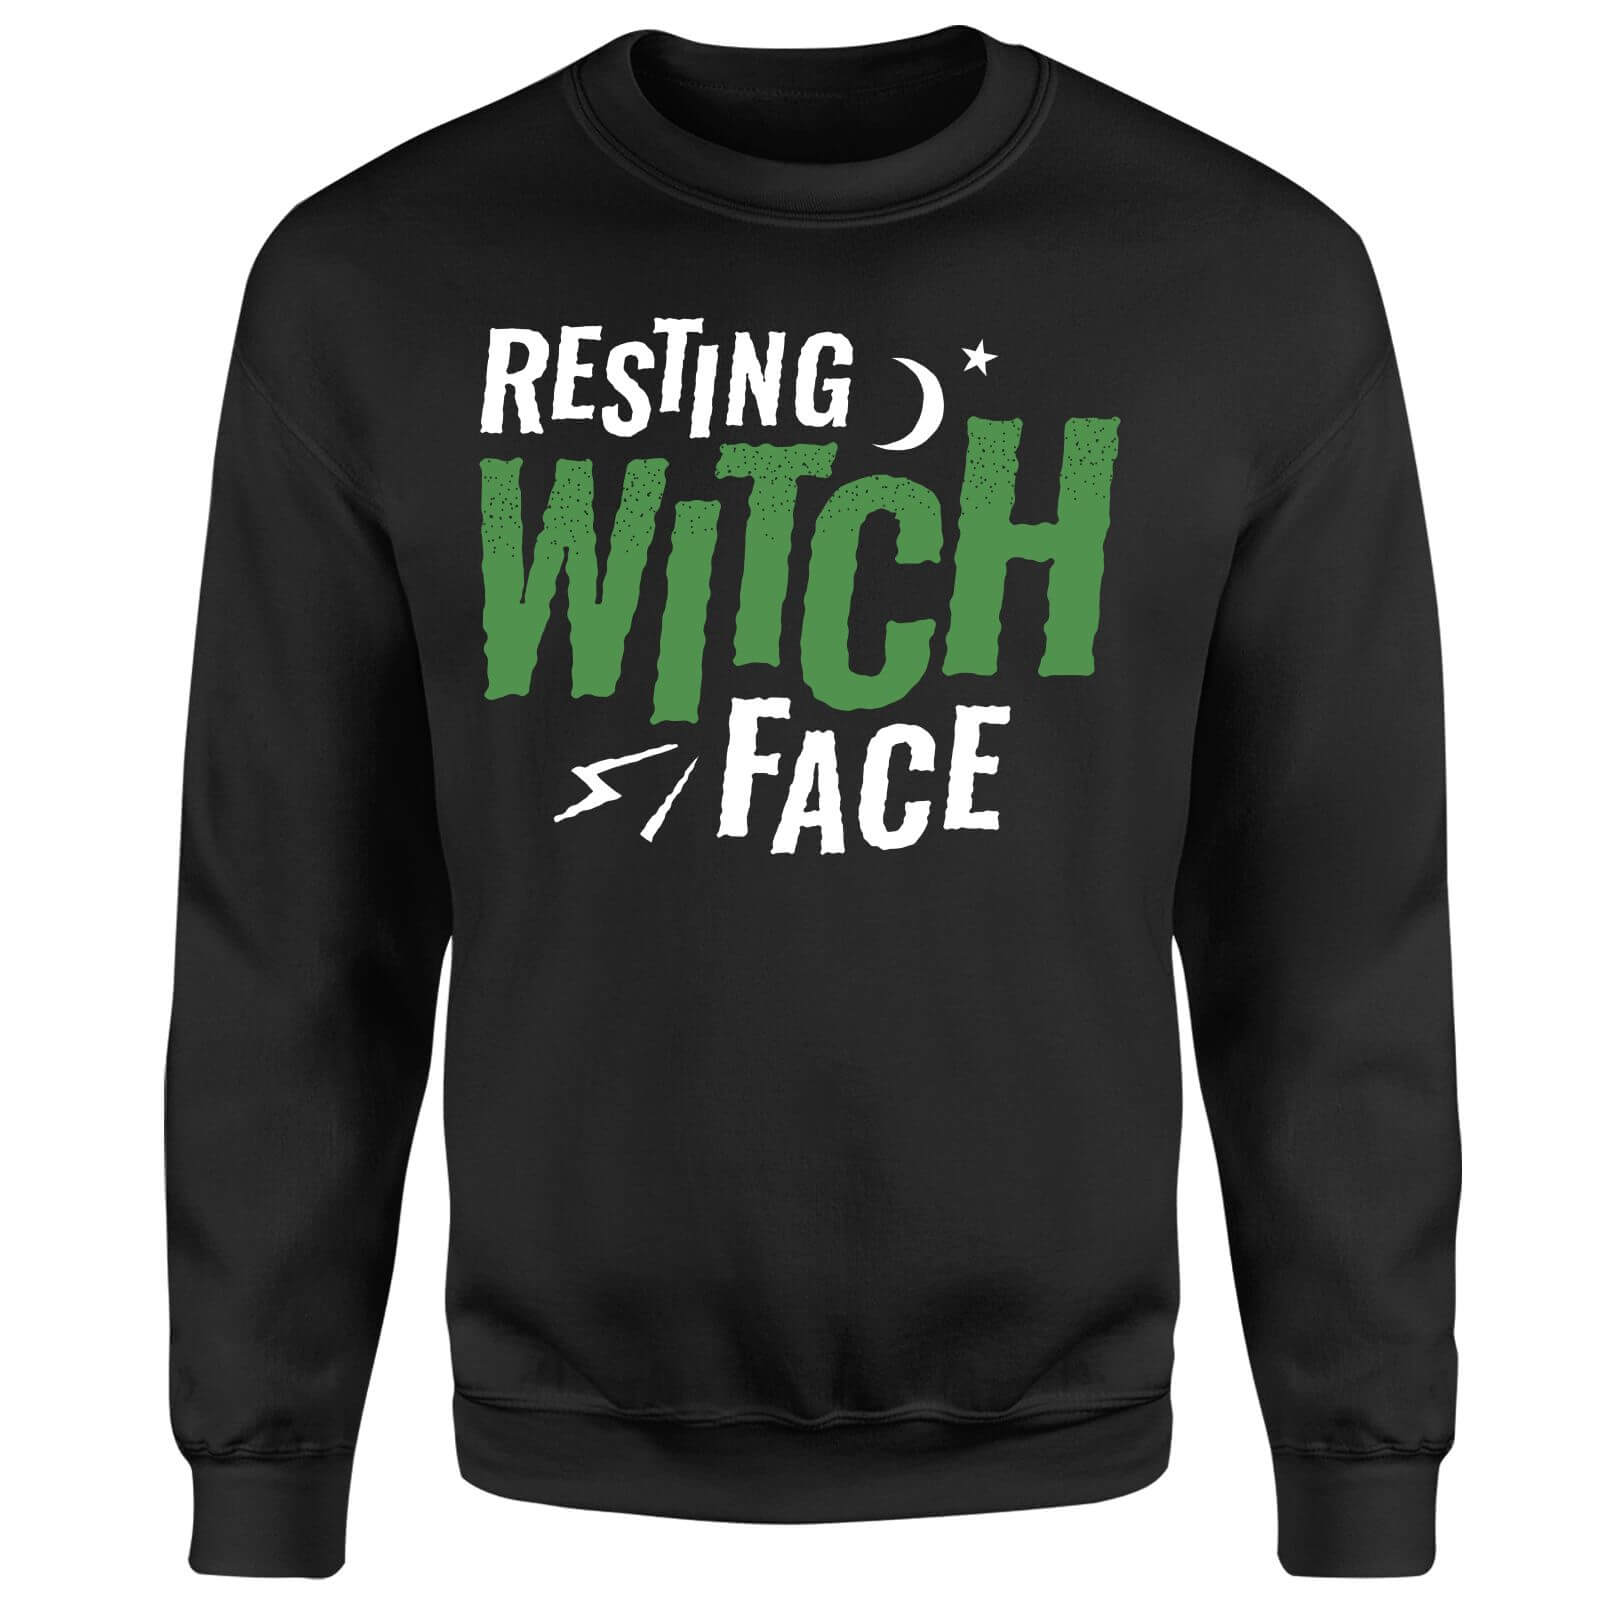 Resting Witch Face Sweatshirt - Black - L - Black